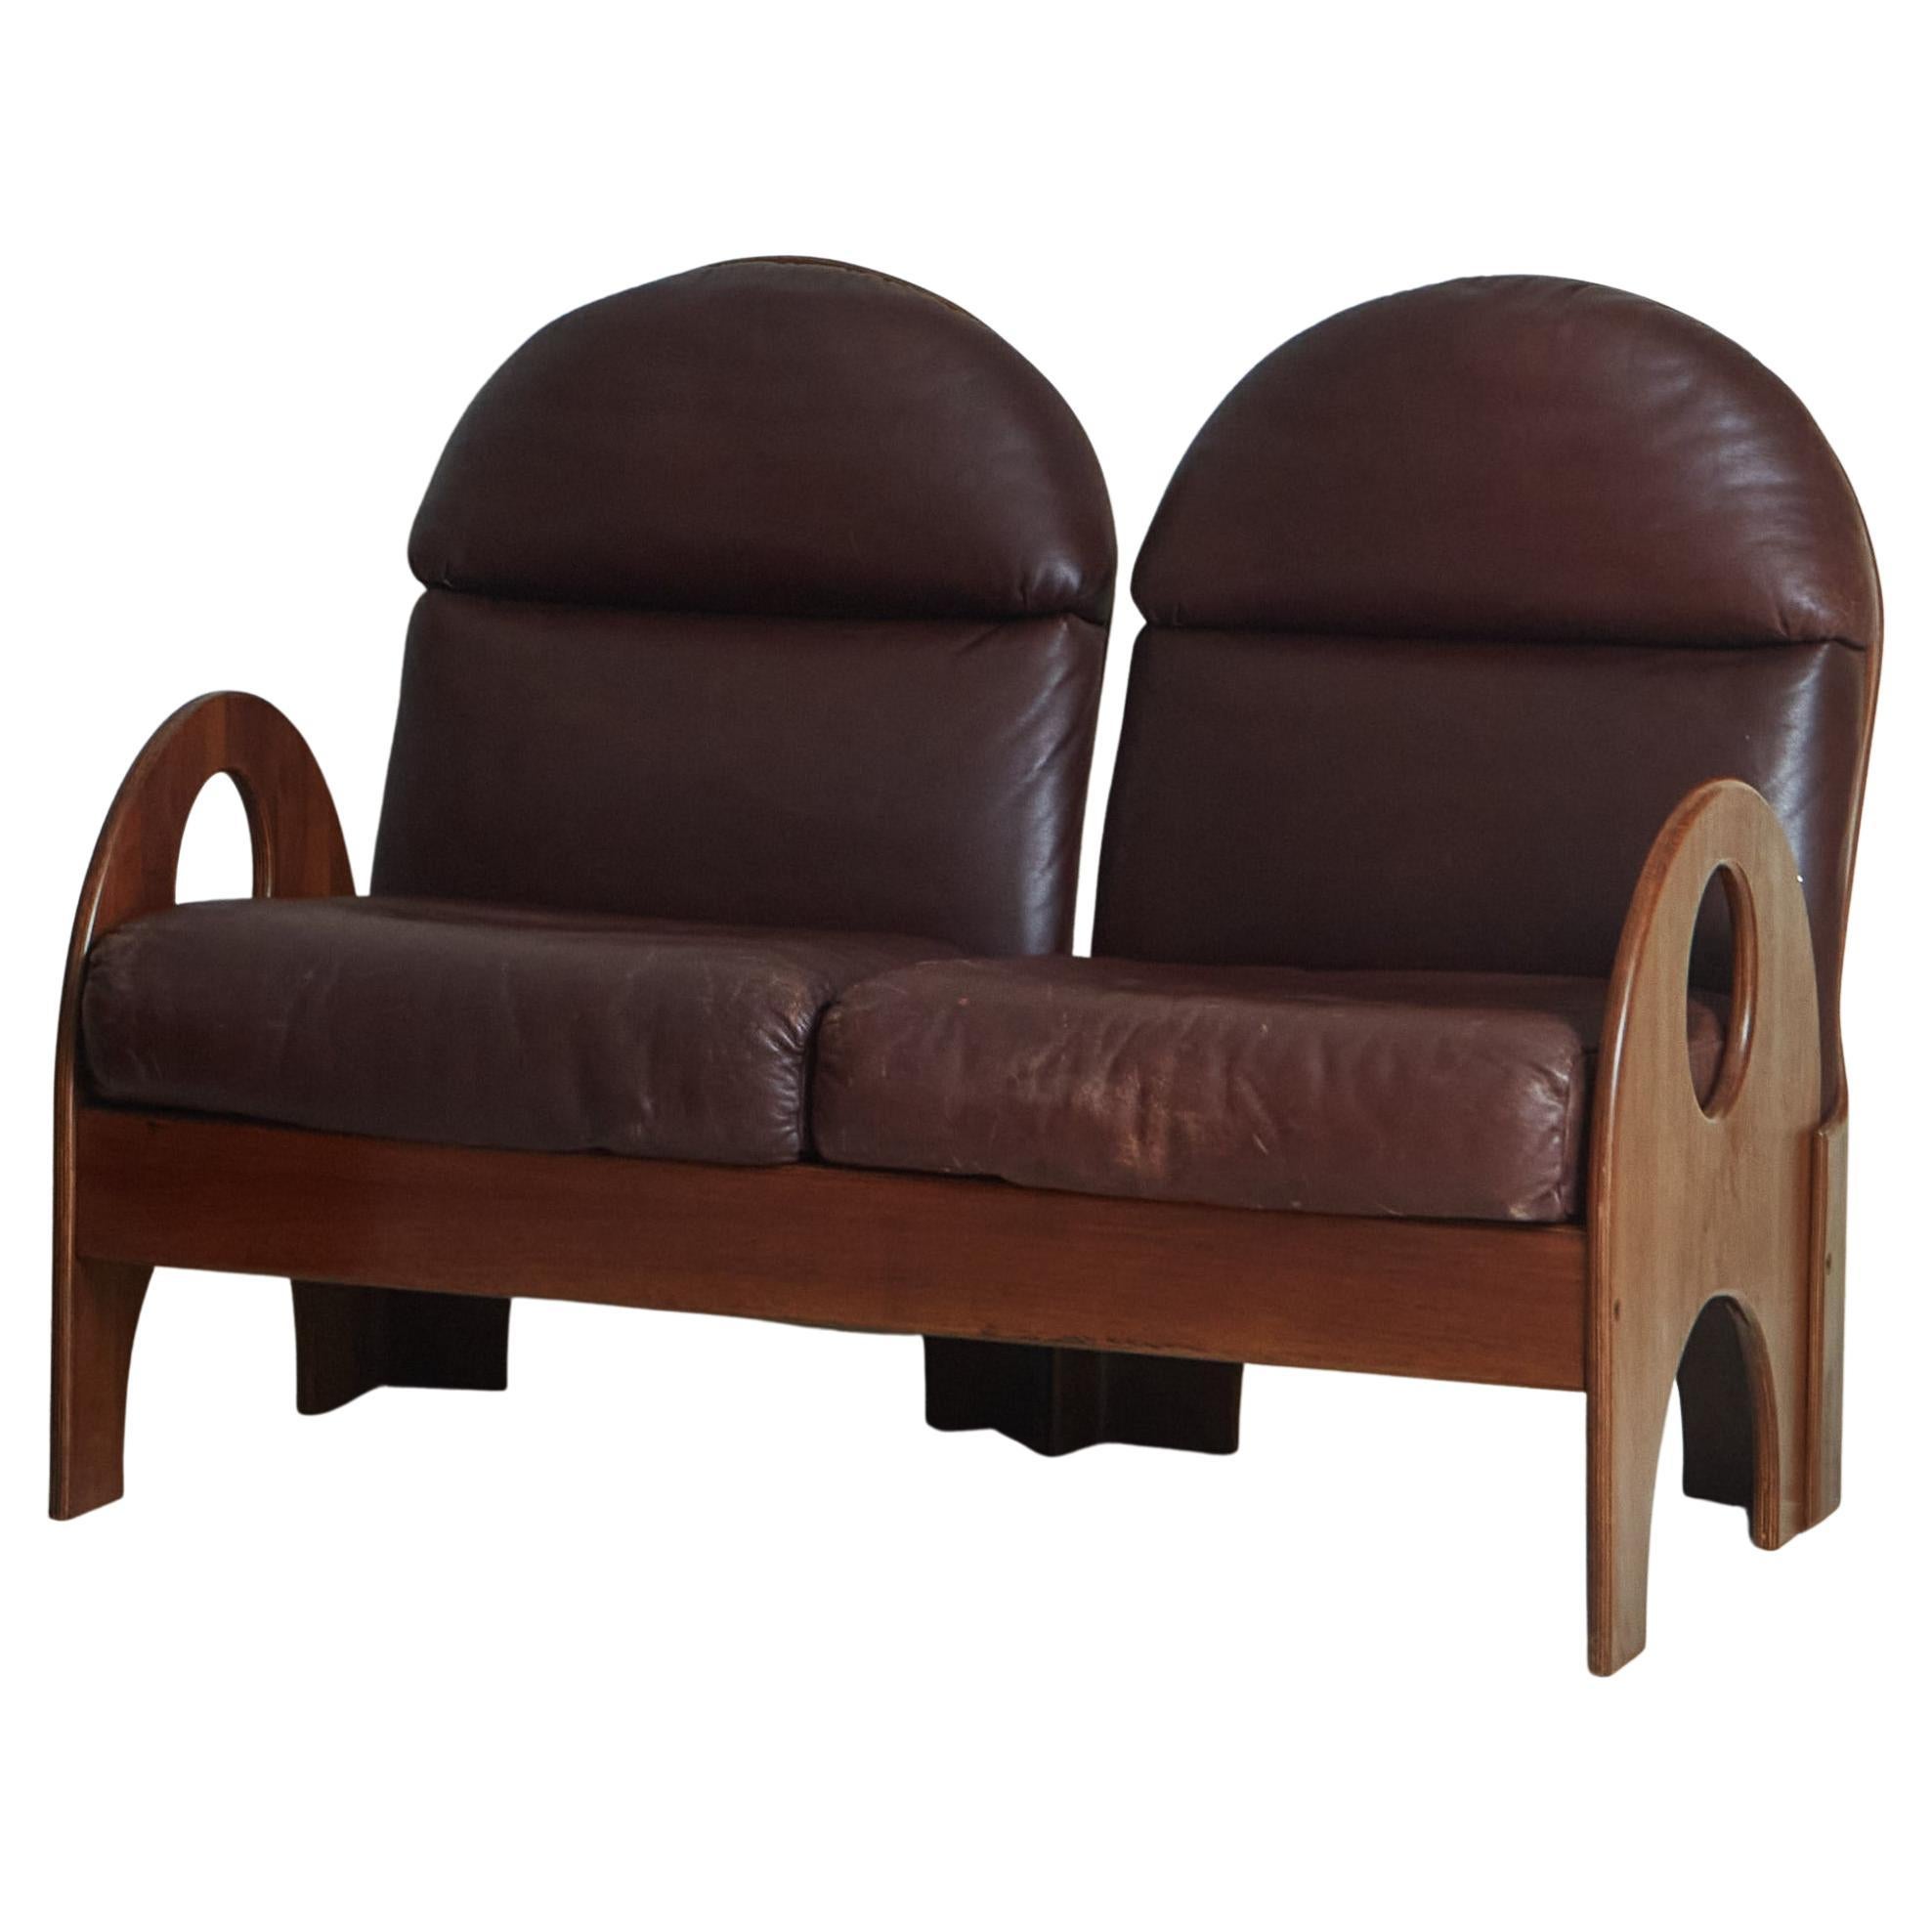 Walnut + Leather 2 Seat ‘Arcata’ Sofas by Gae Aulenti for Poltronova, Italy 1968 For Sale